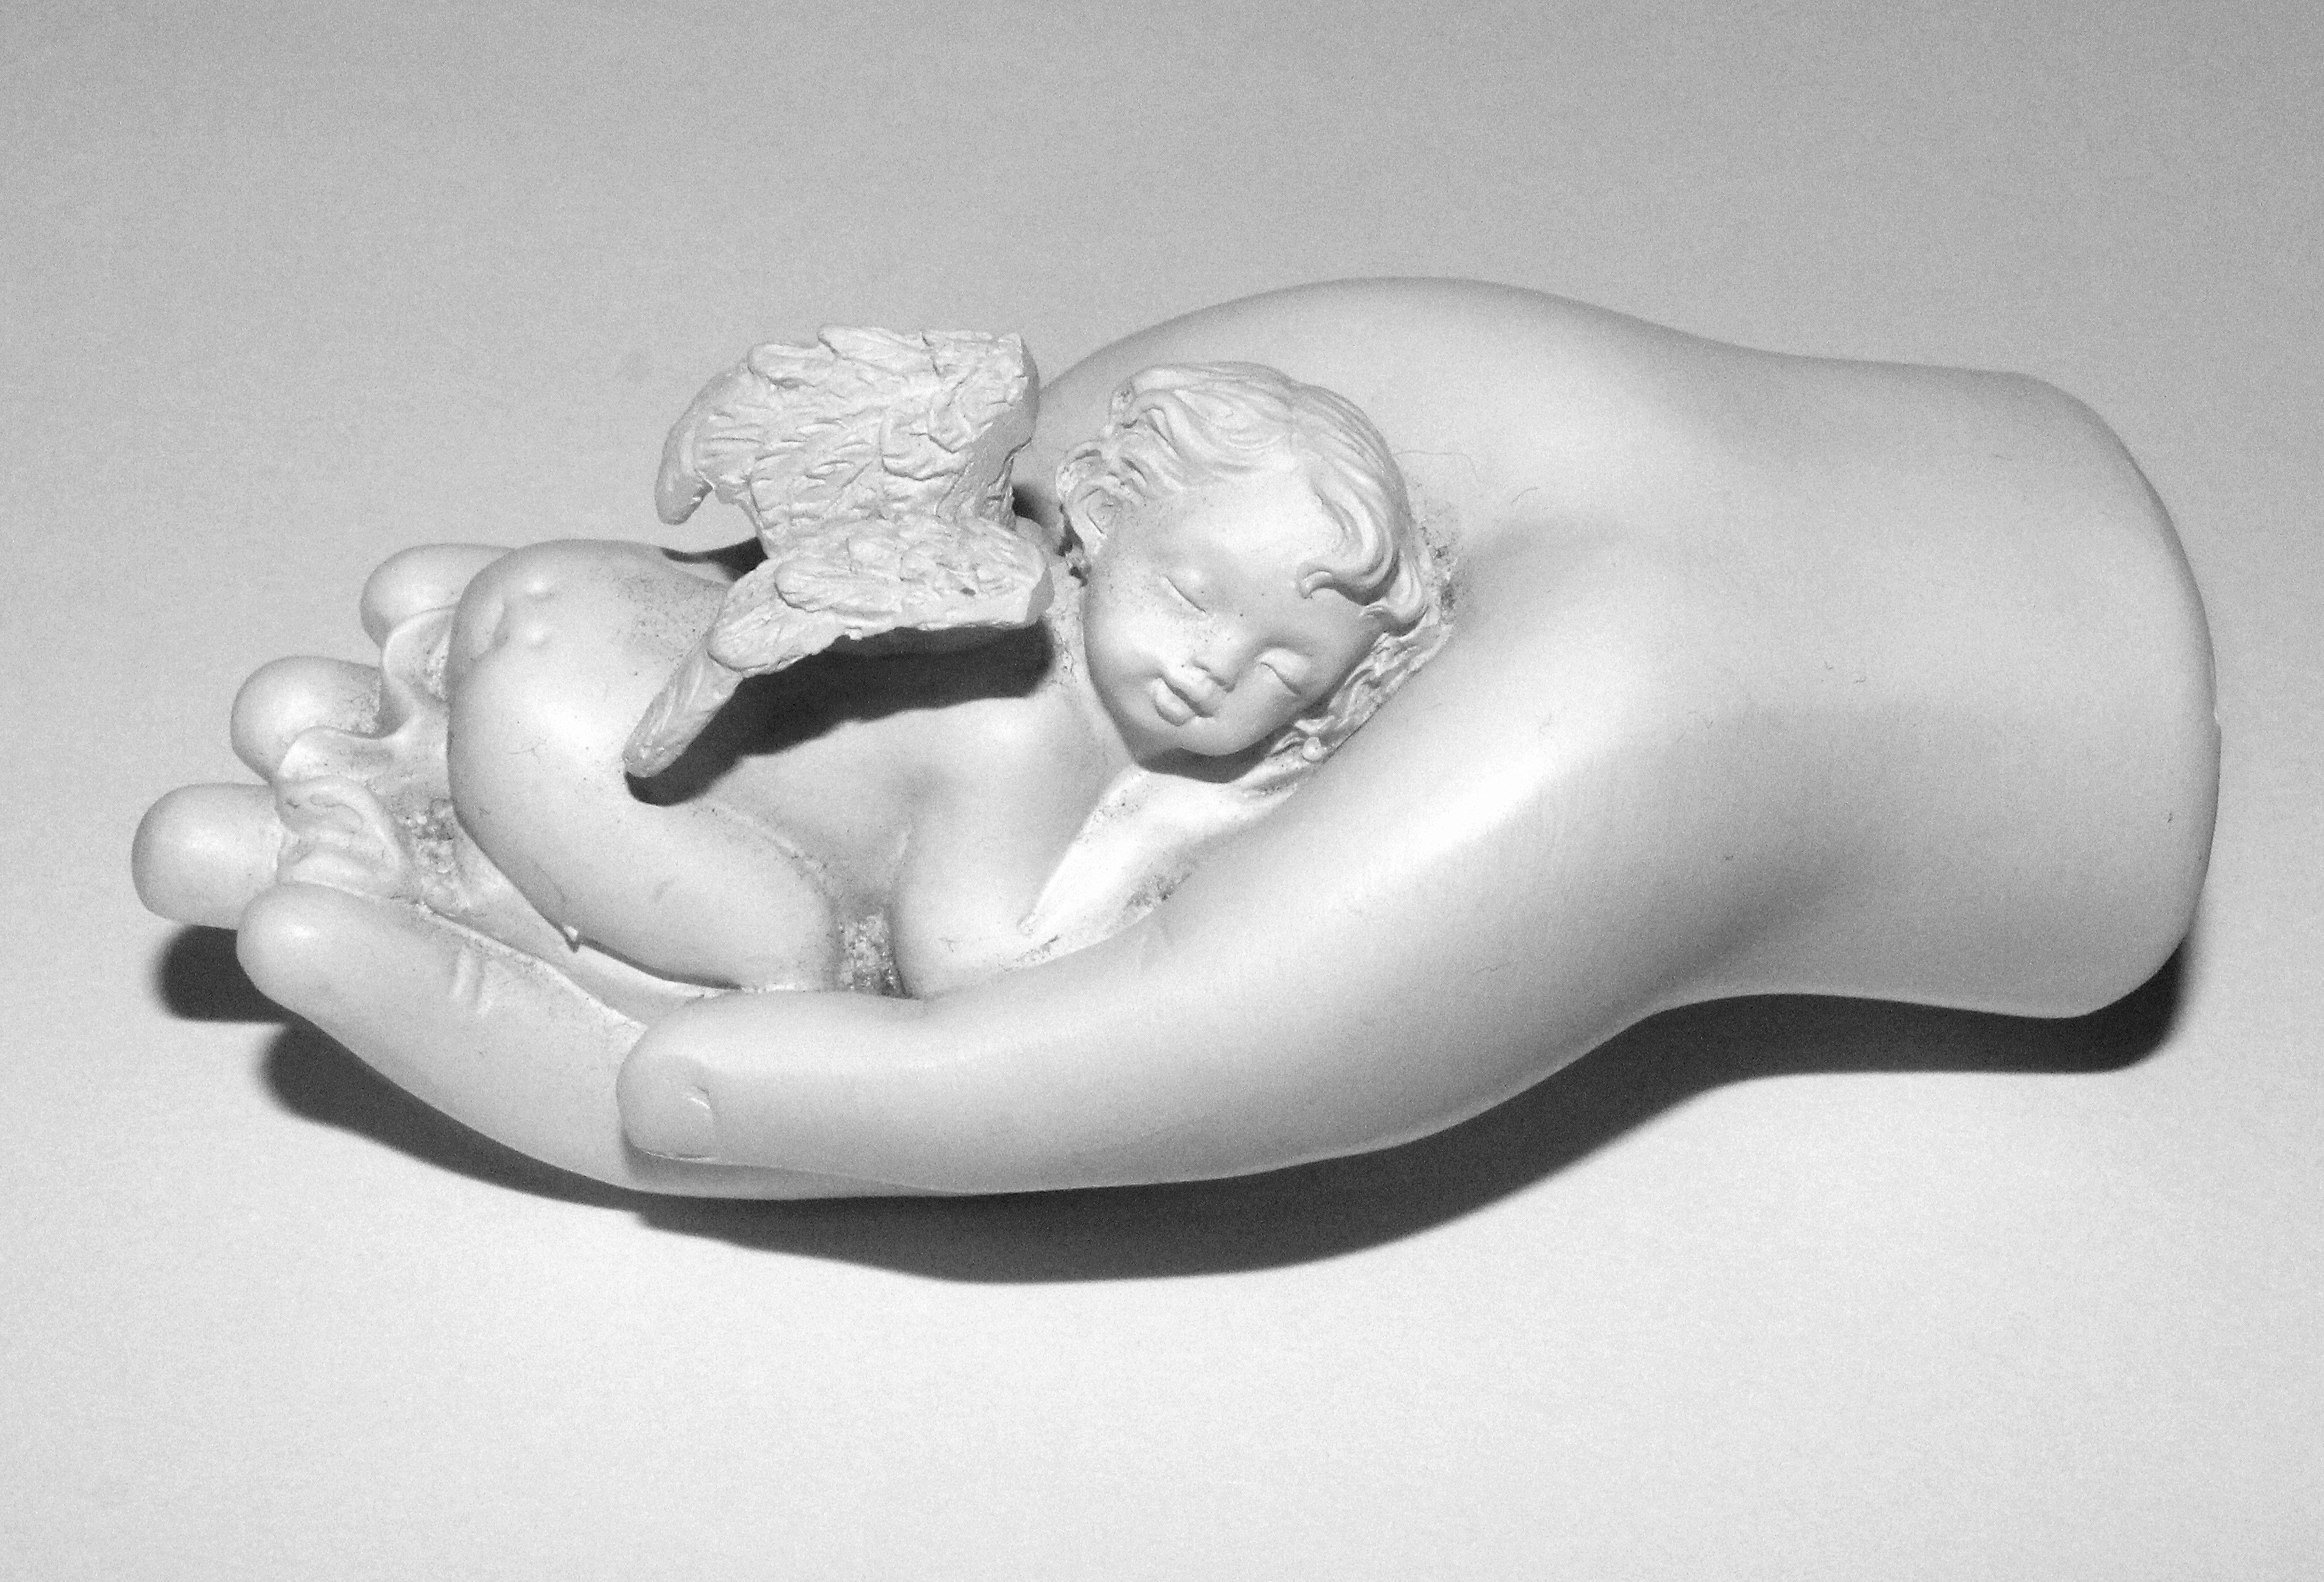 cherub sleeping on hand ceramic figurine